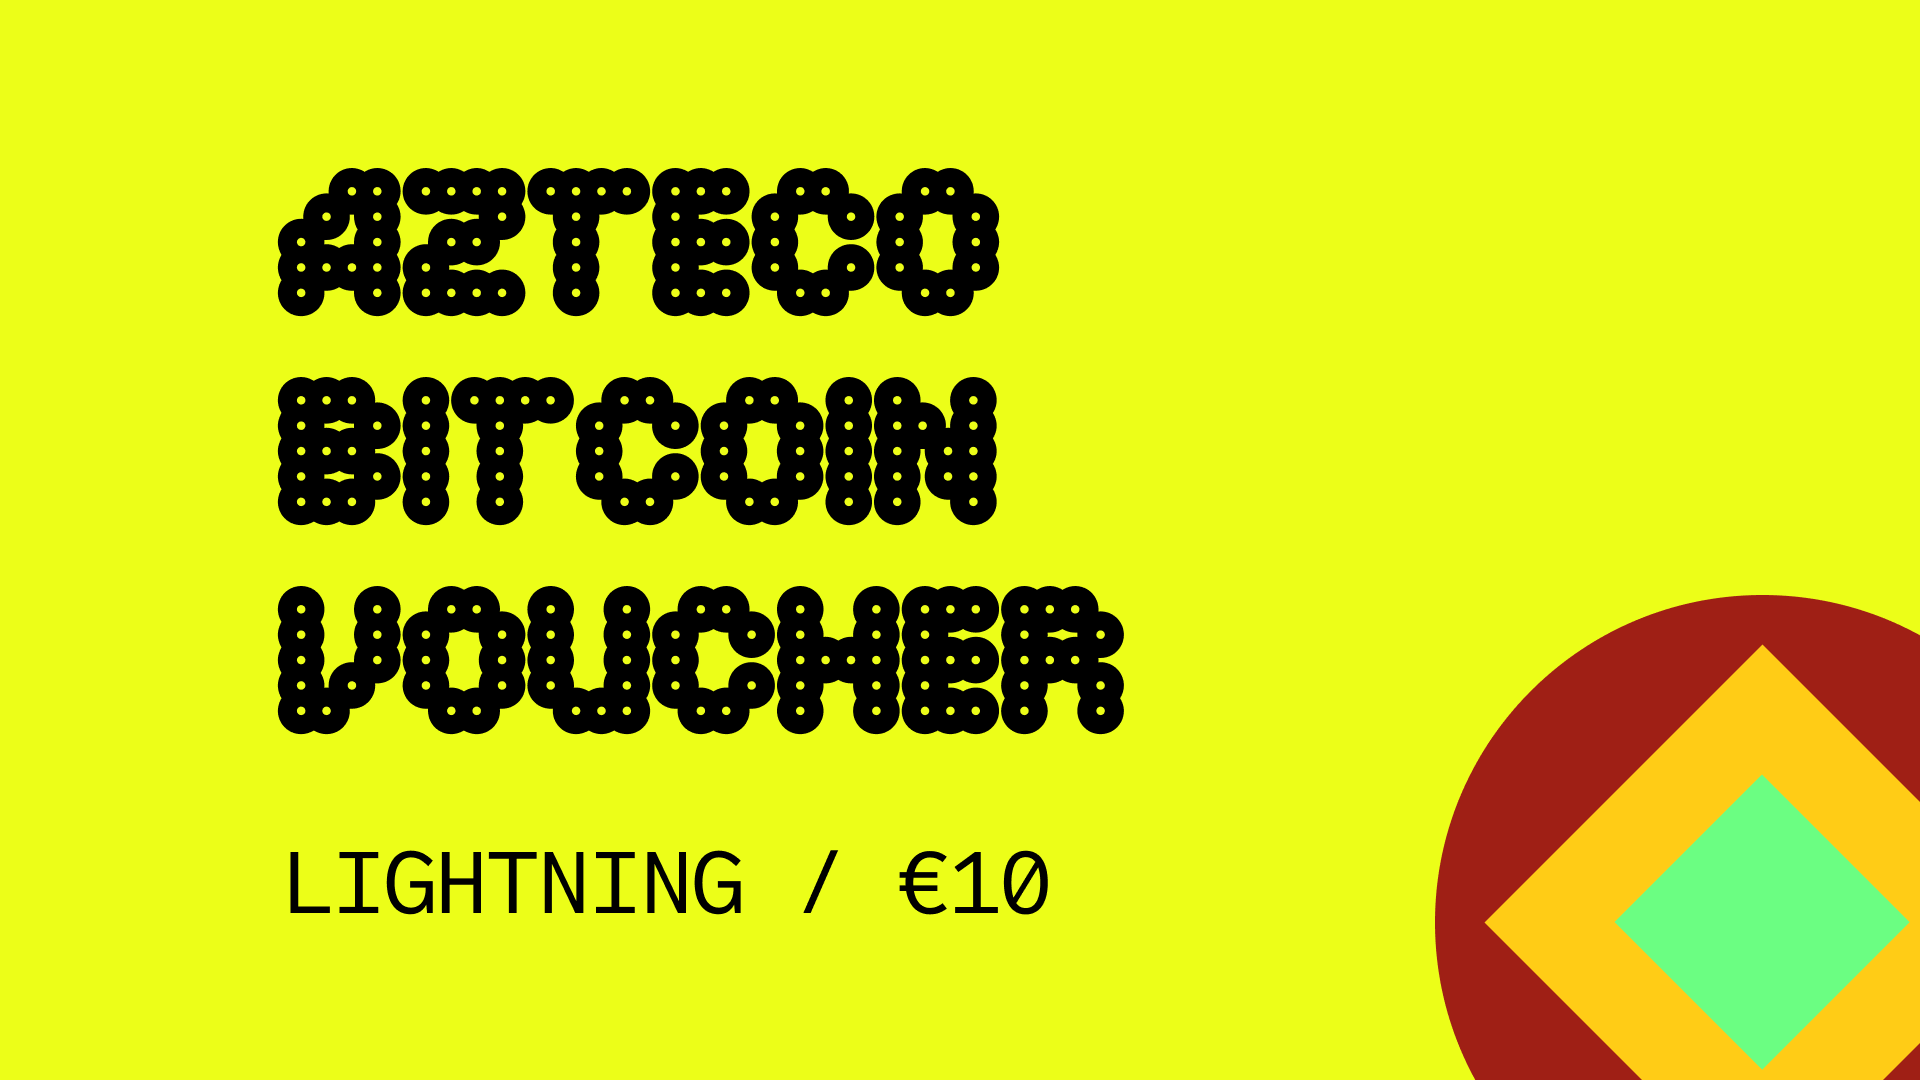 (11.3$) Azteco Bitcoin Lighting €10 Voucher